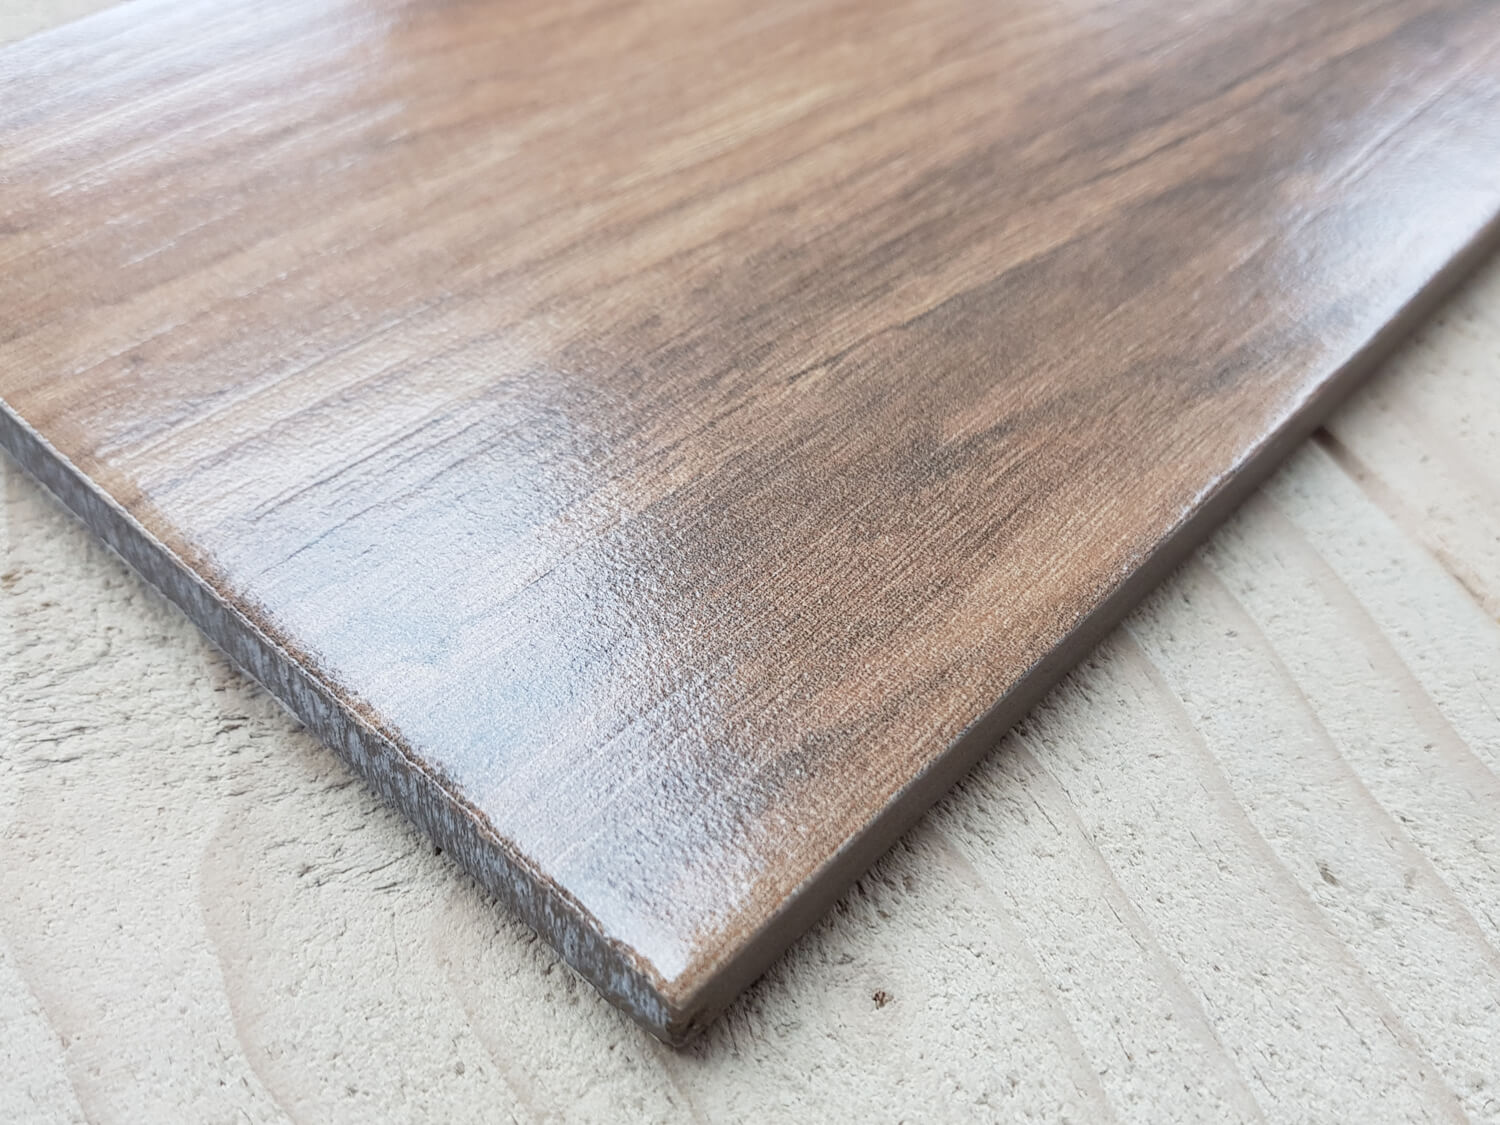 Planet Rovere Wood Look Floor Tile